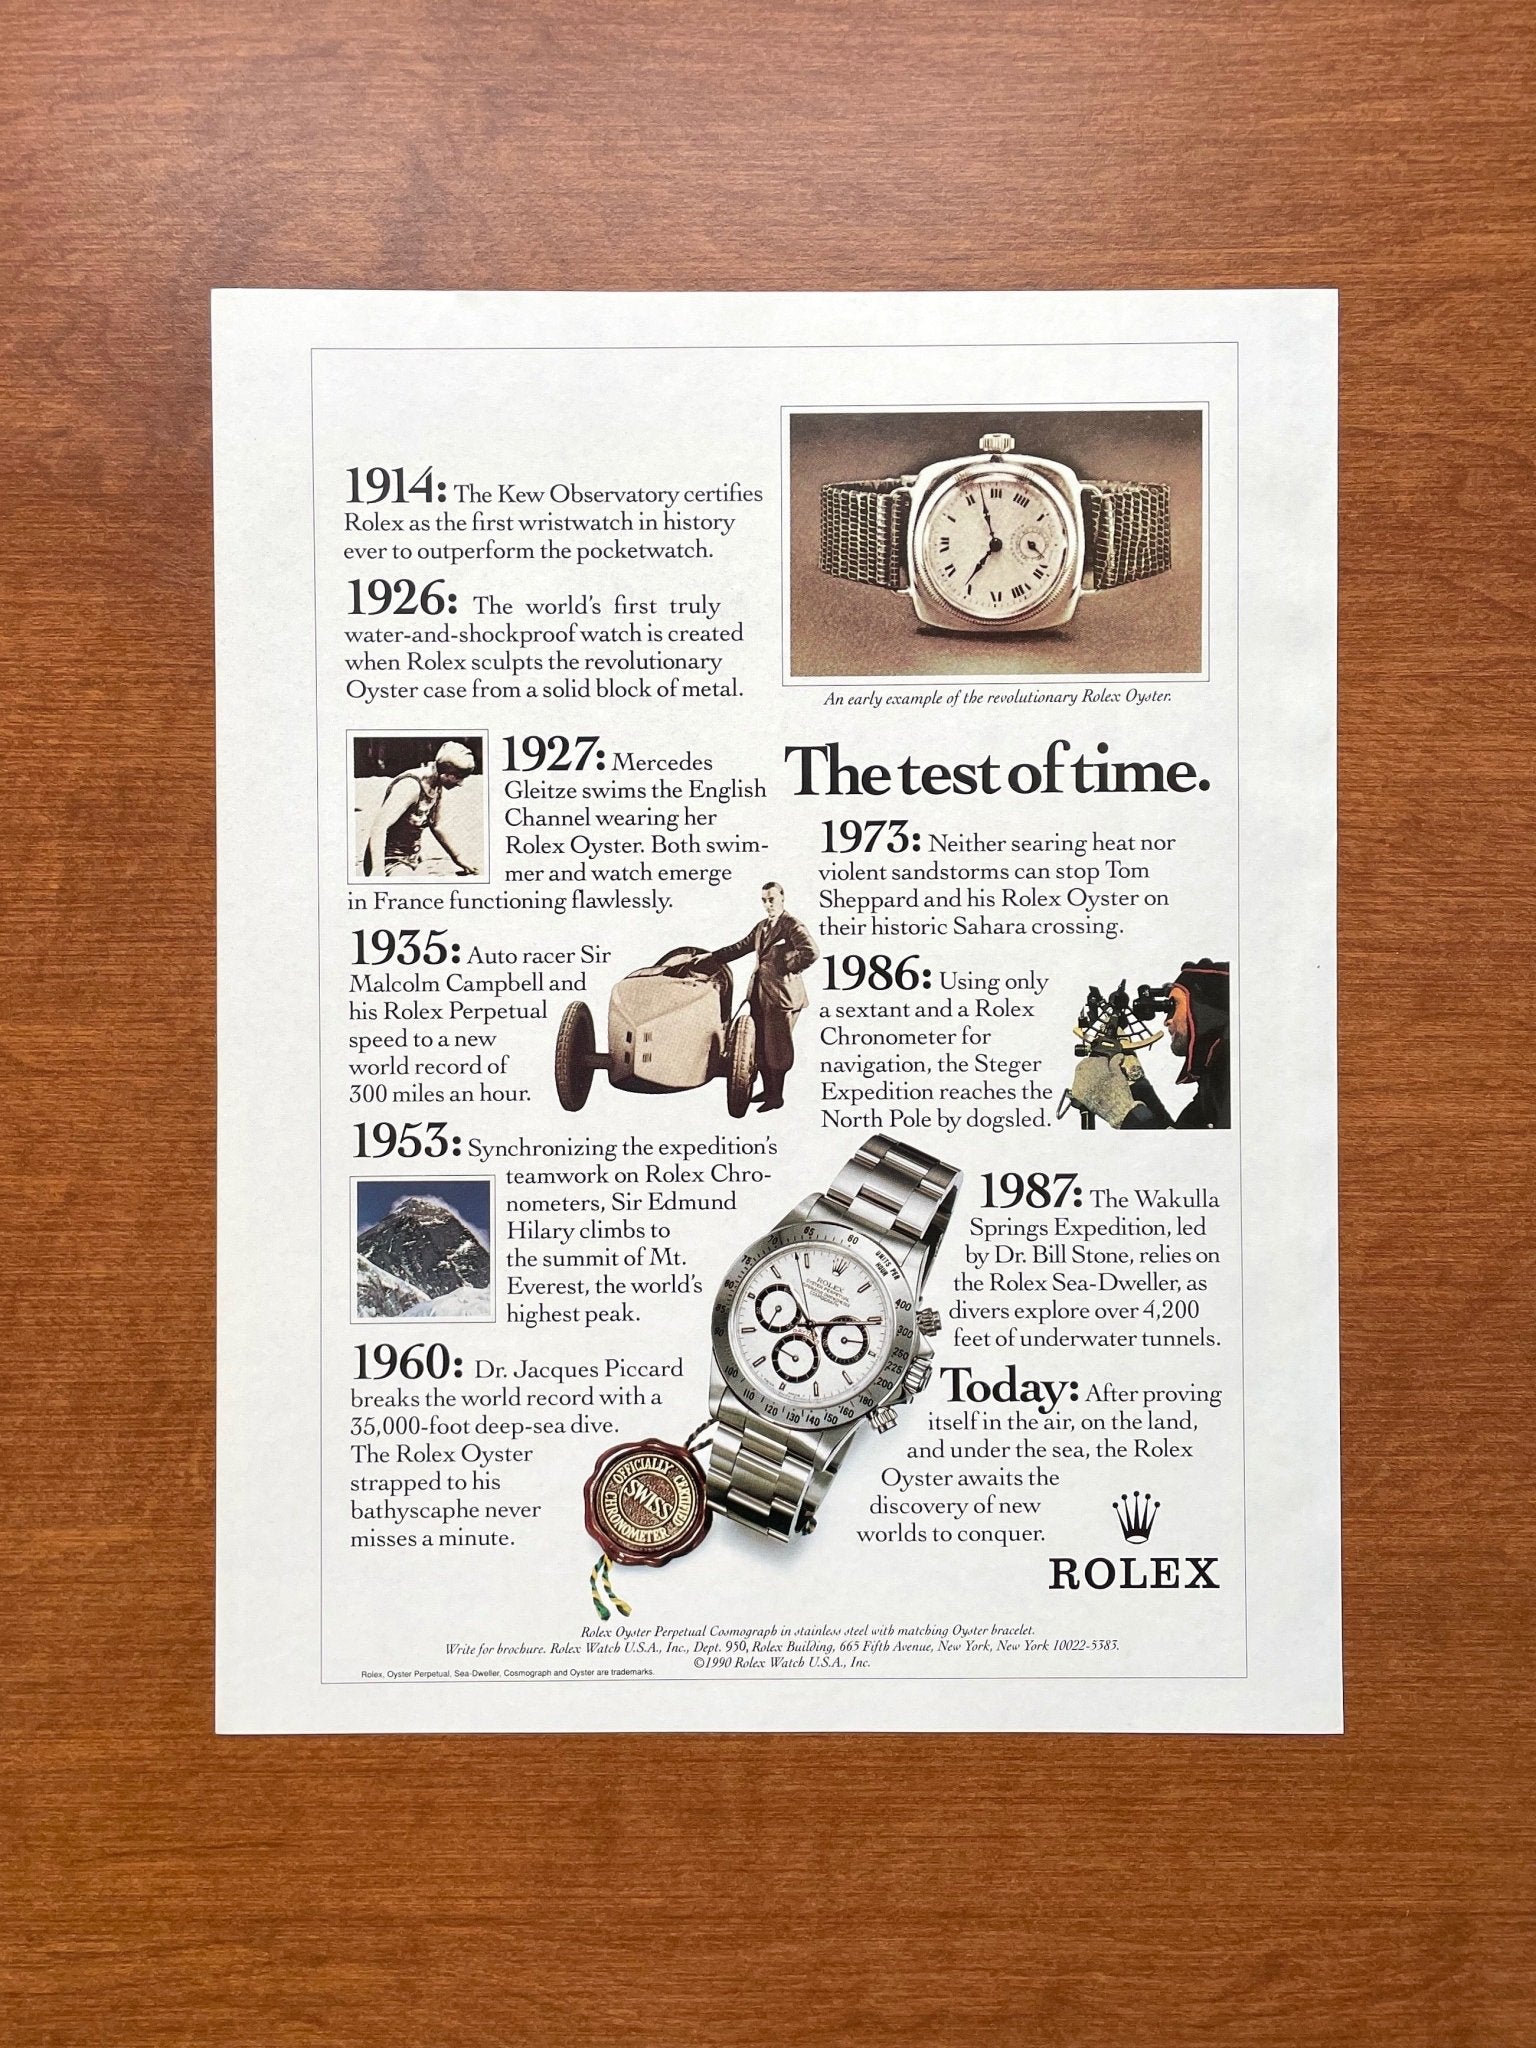 1990 Rolex Daytona Ref. 16520 "The test of time." Advertisement